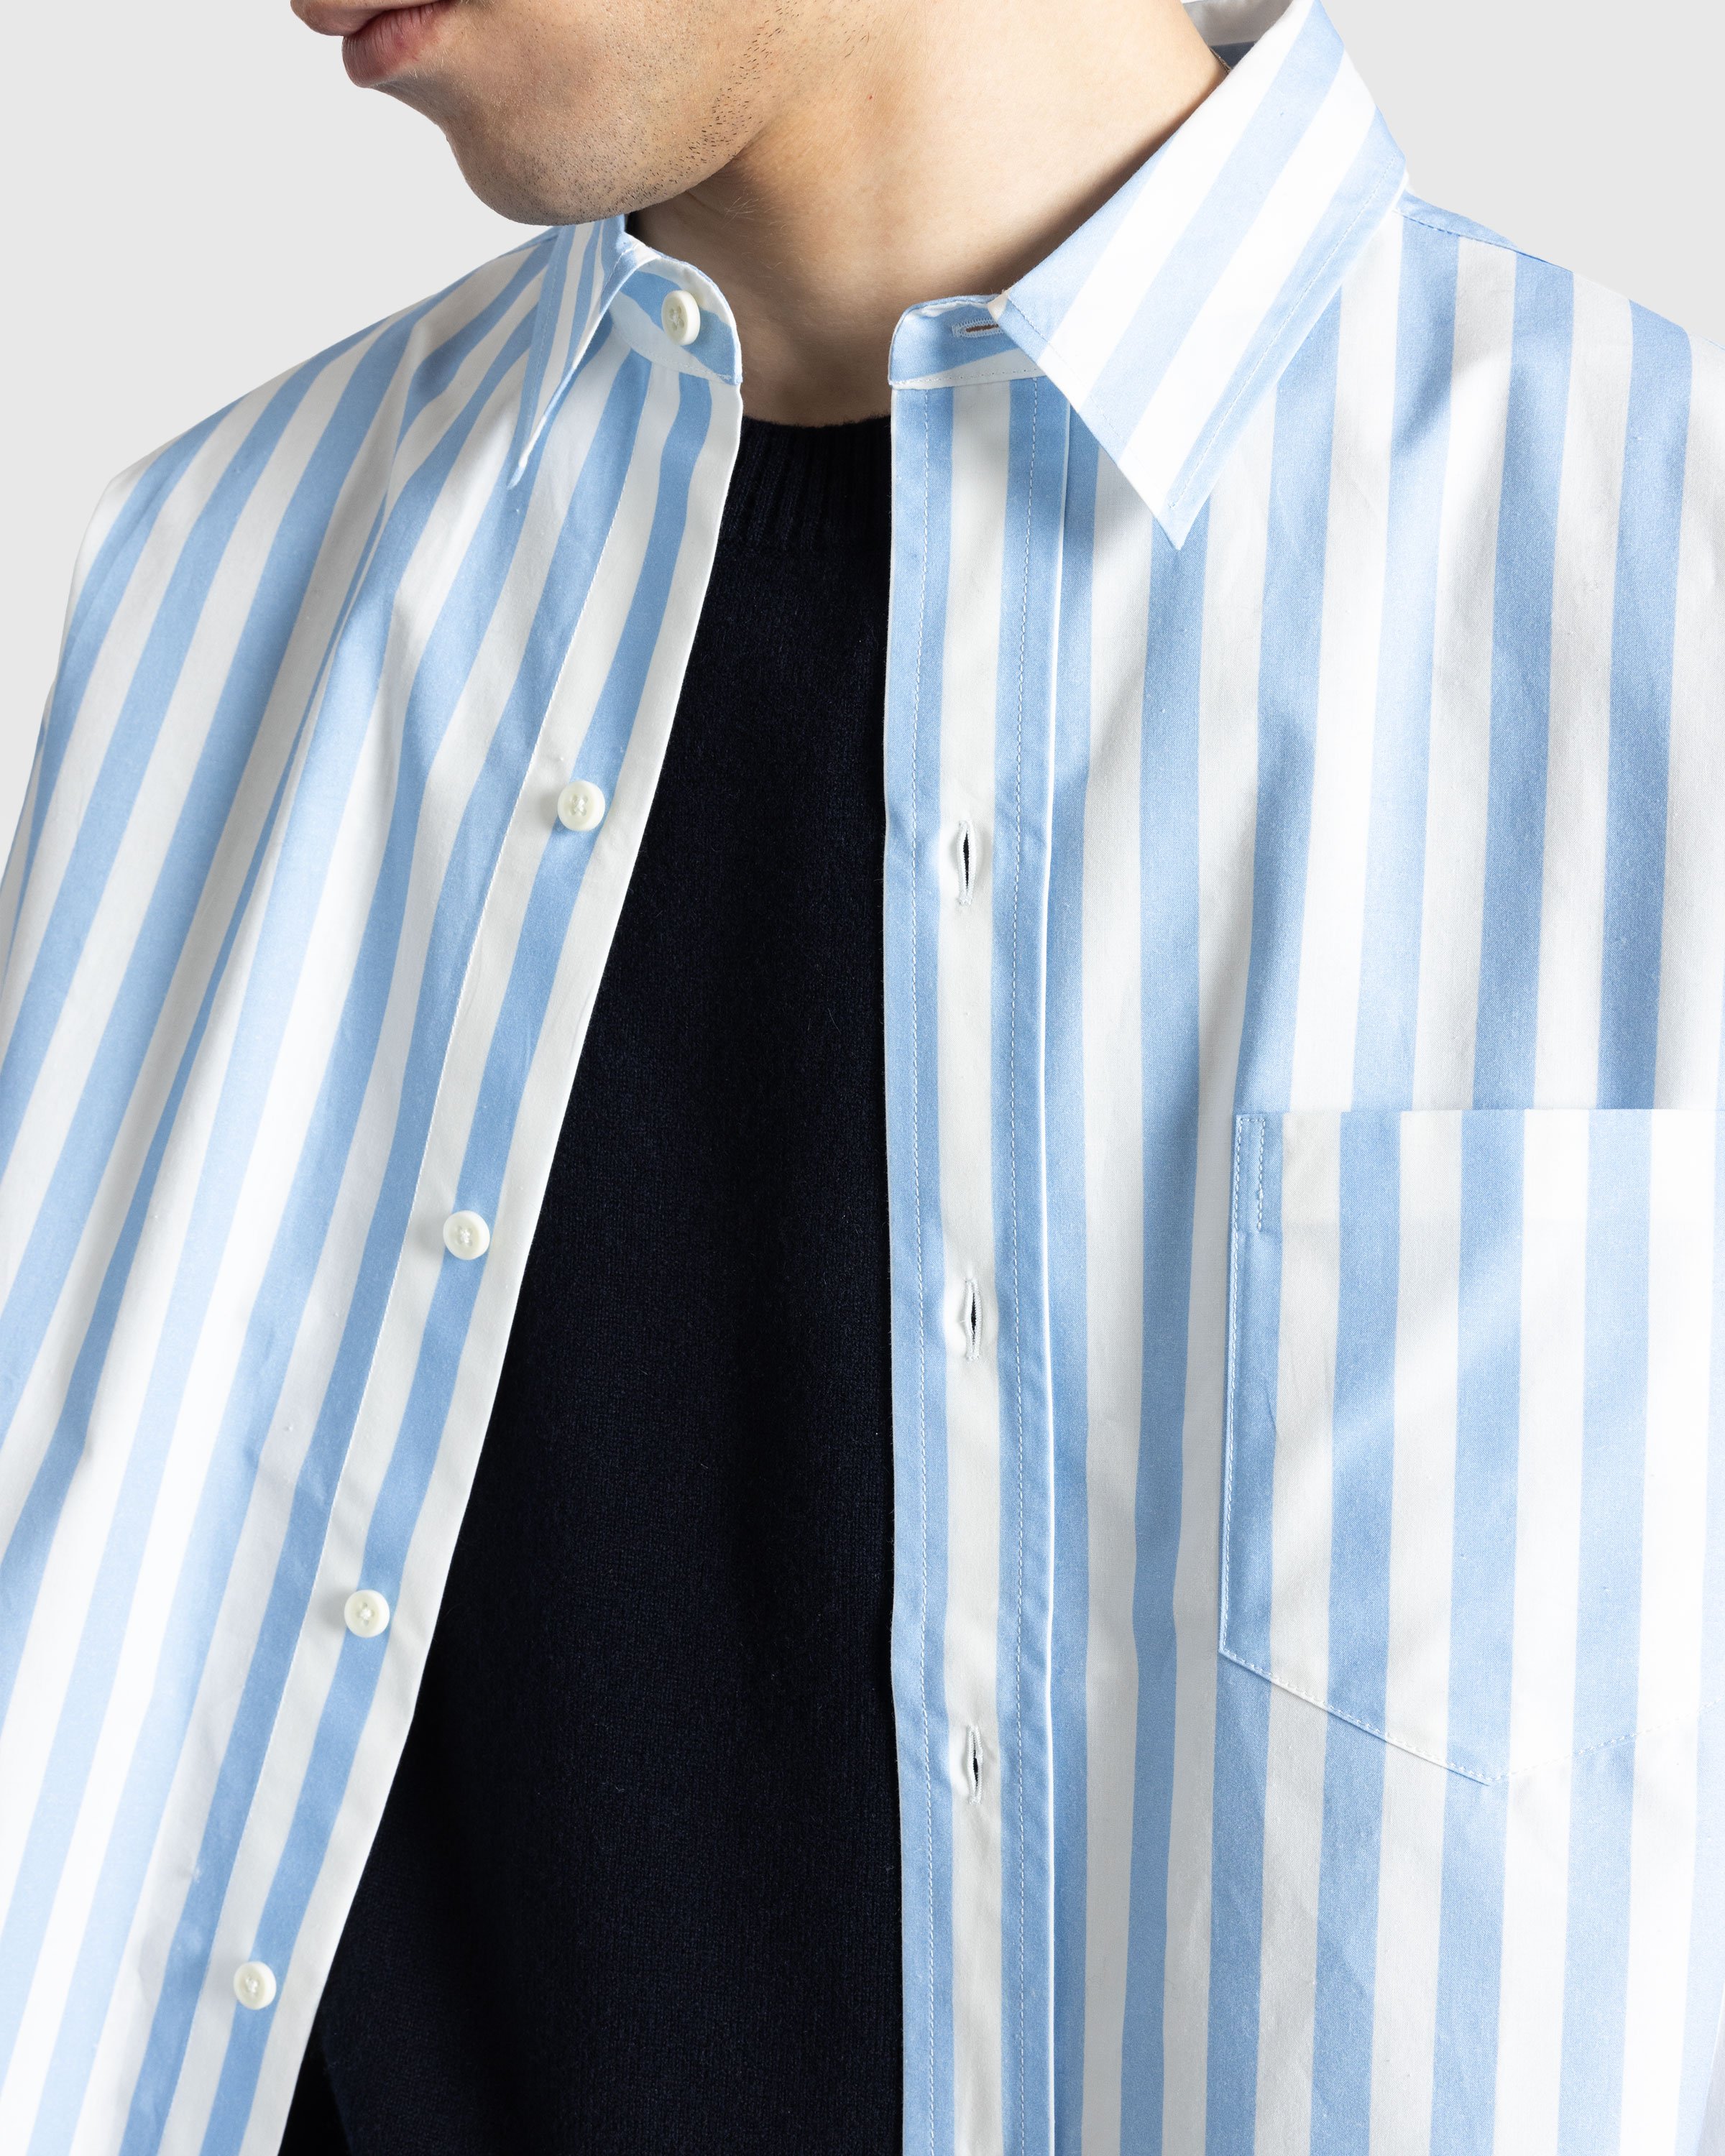 Meta Campania Collective - Pablo Exaggerated Unlined Organic Cotton Poplin Shirt Light Blue Stripe - Clothing - Blue - Image 5